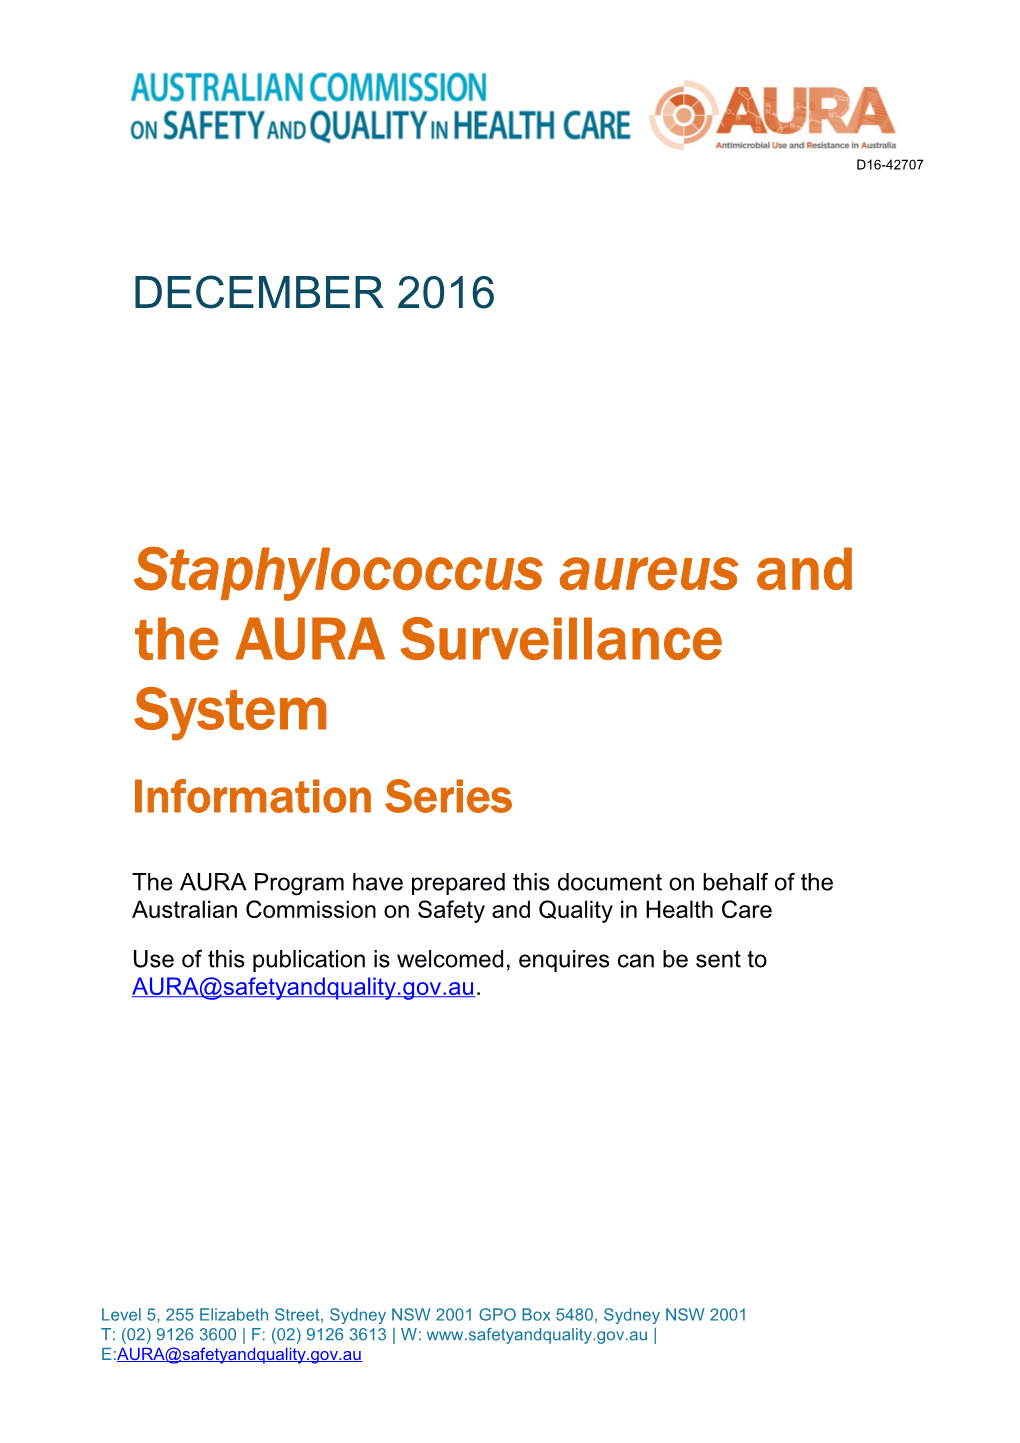 Staphylococcus Aureus and the AURA Surveillance System